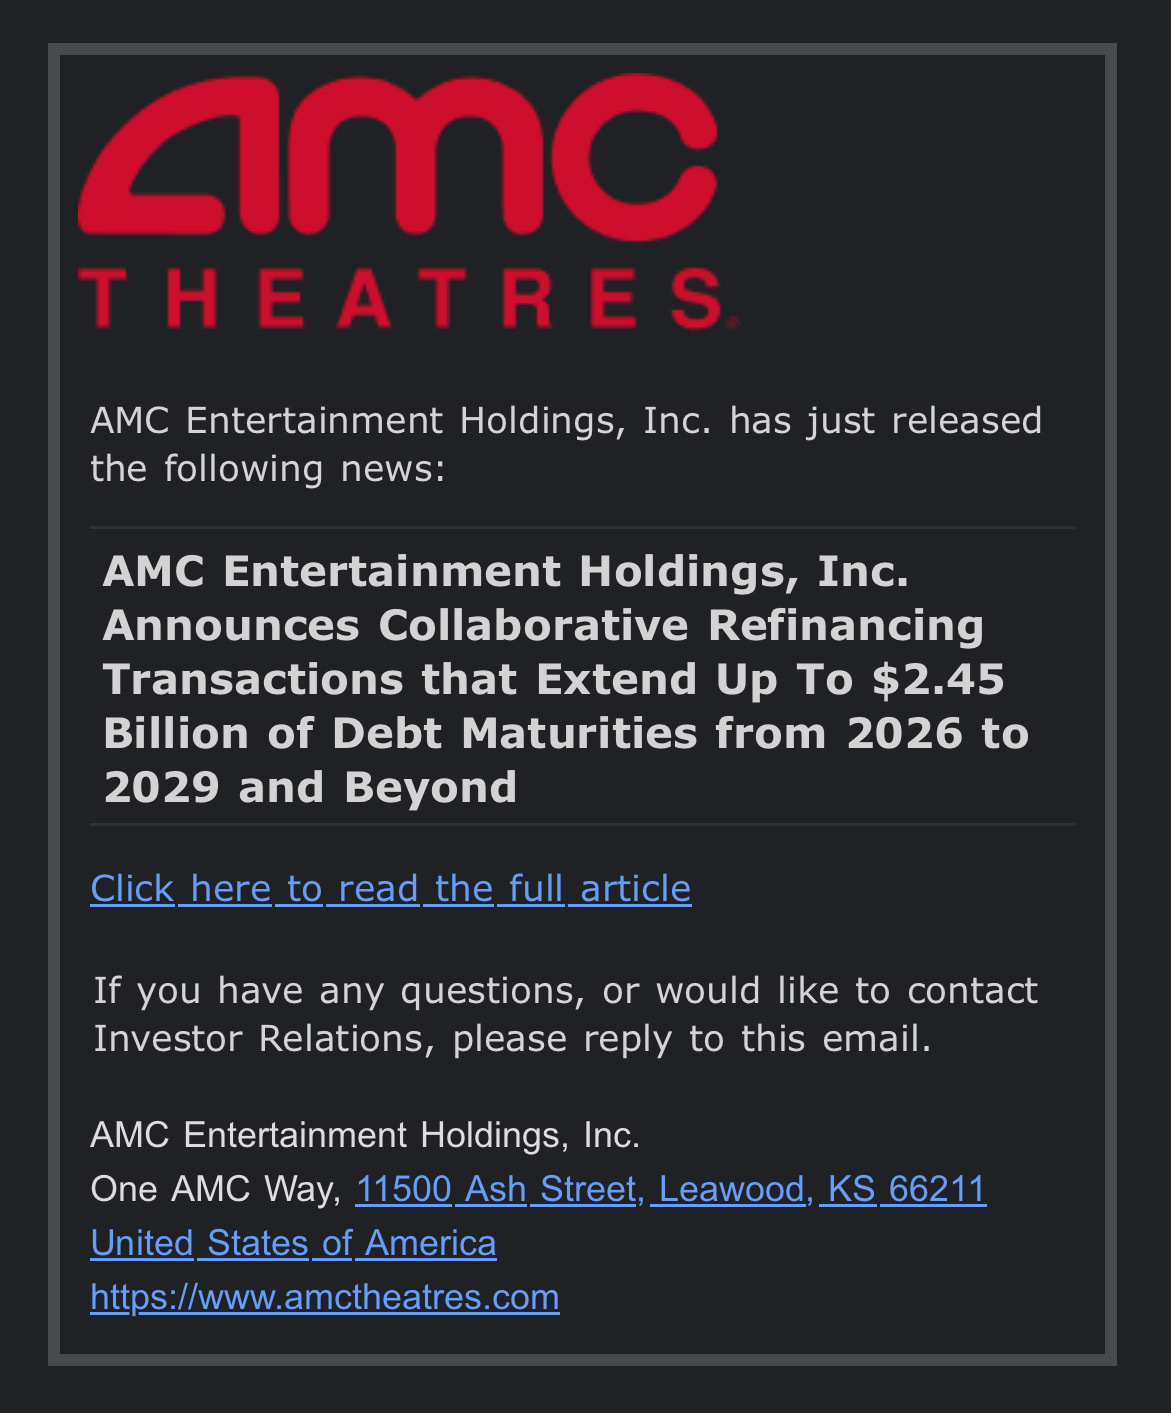 $AMC Entertainment (AMC.US)$